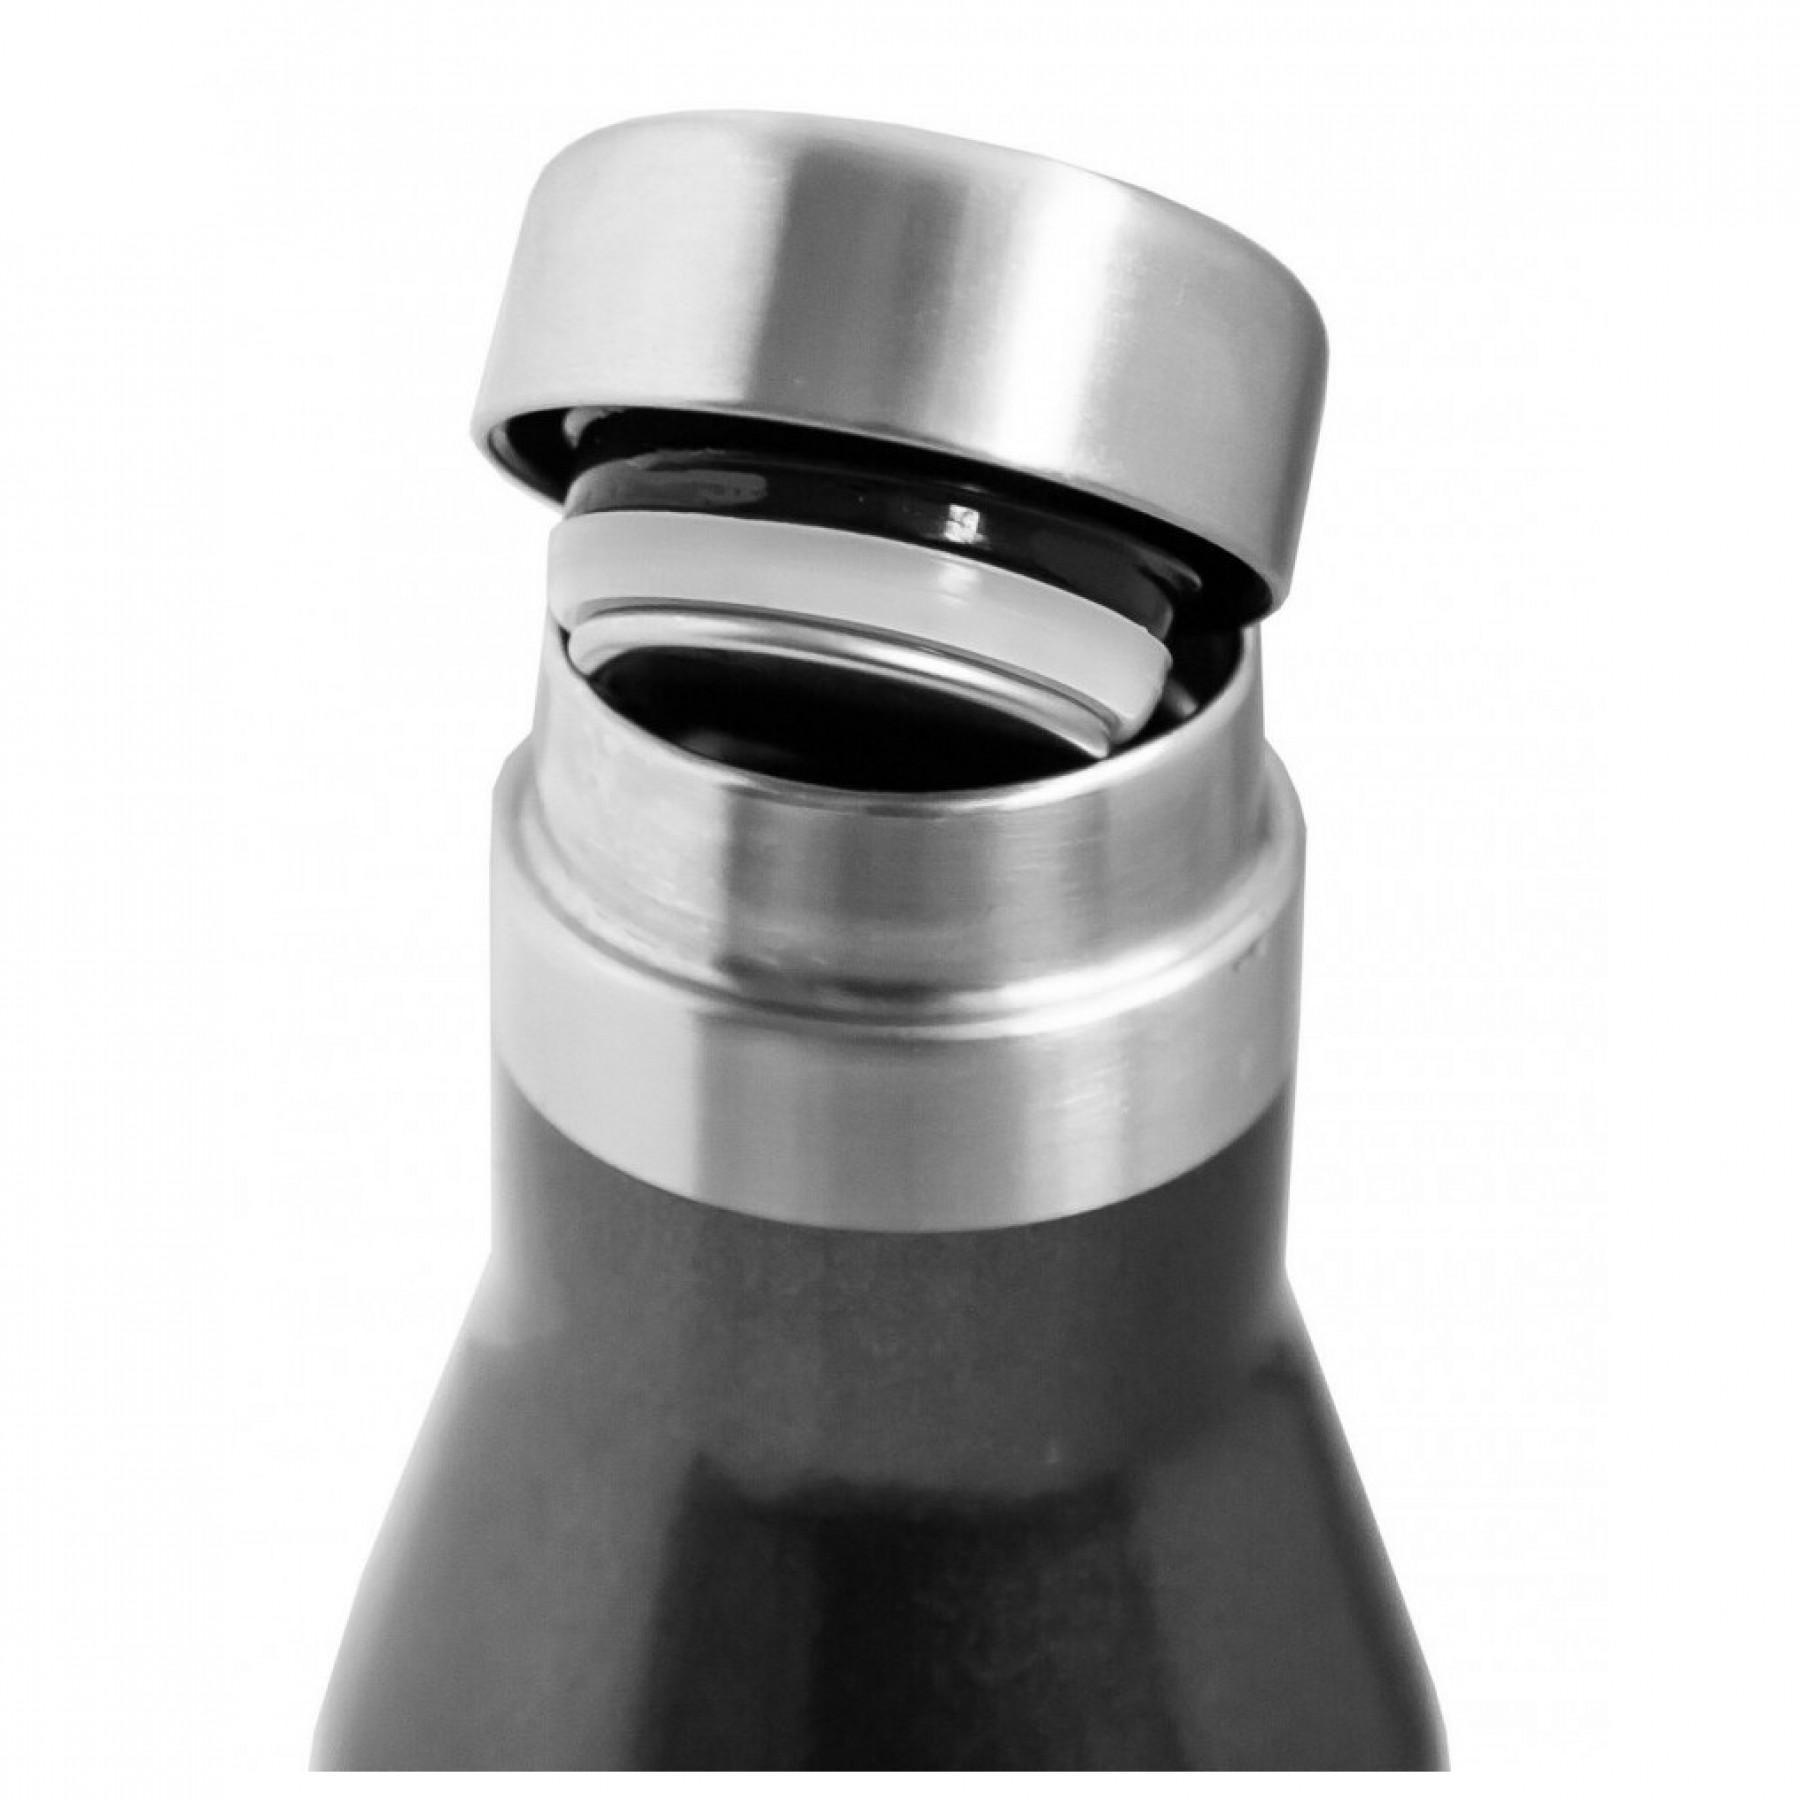 Isolierte Flasche Ecovessel aspen 473 ml